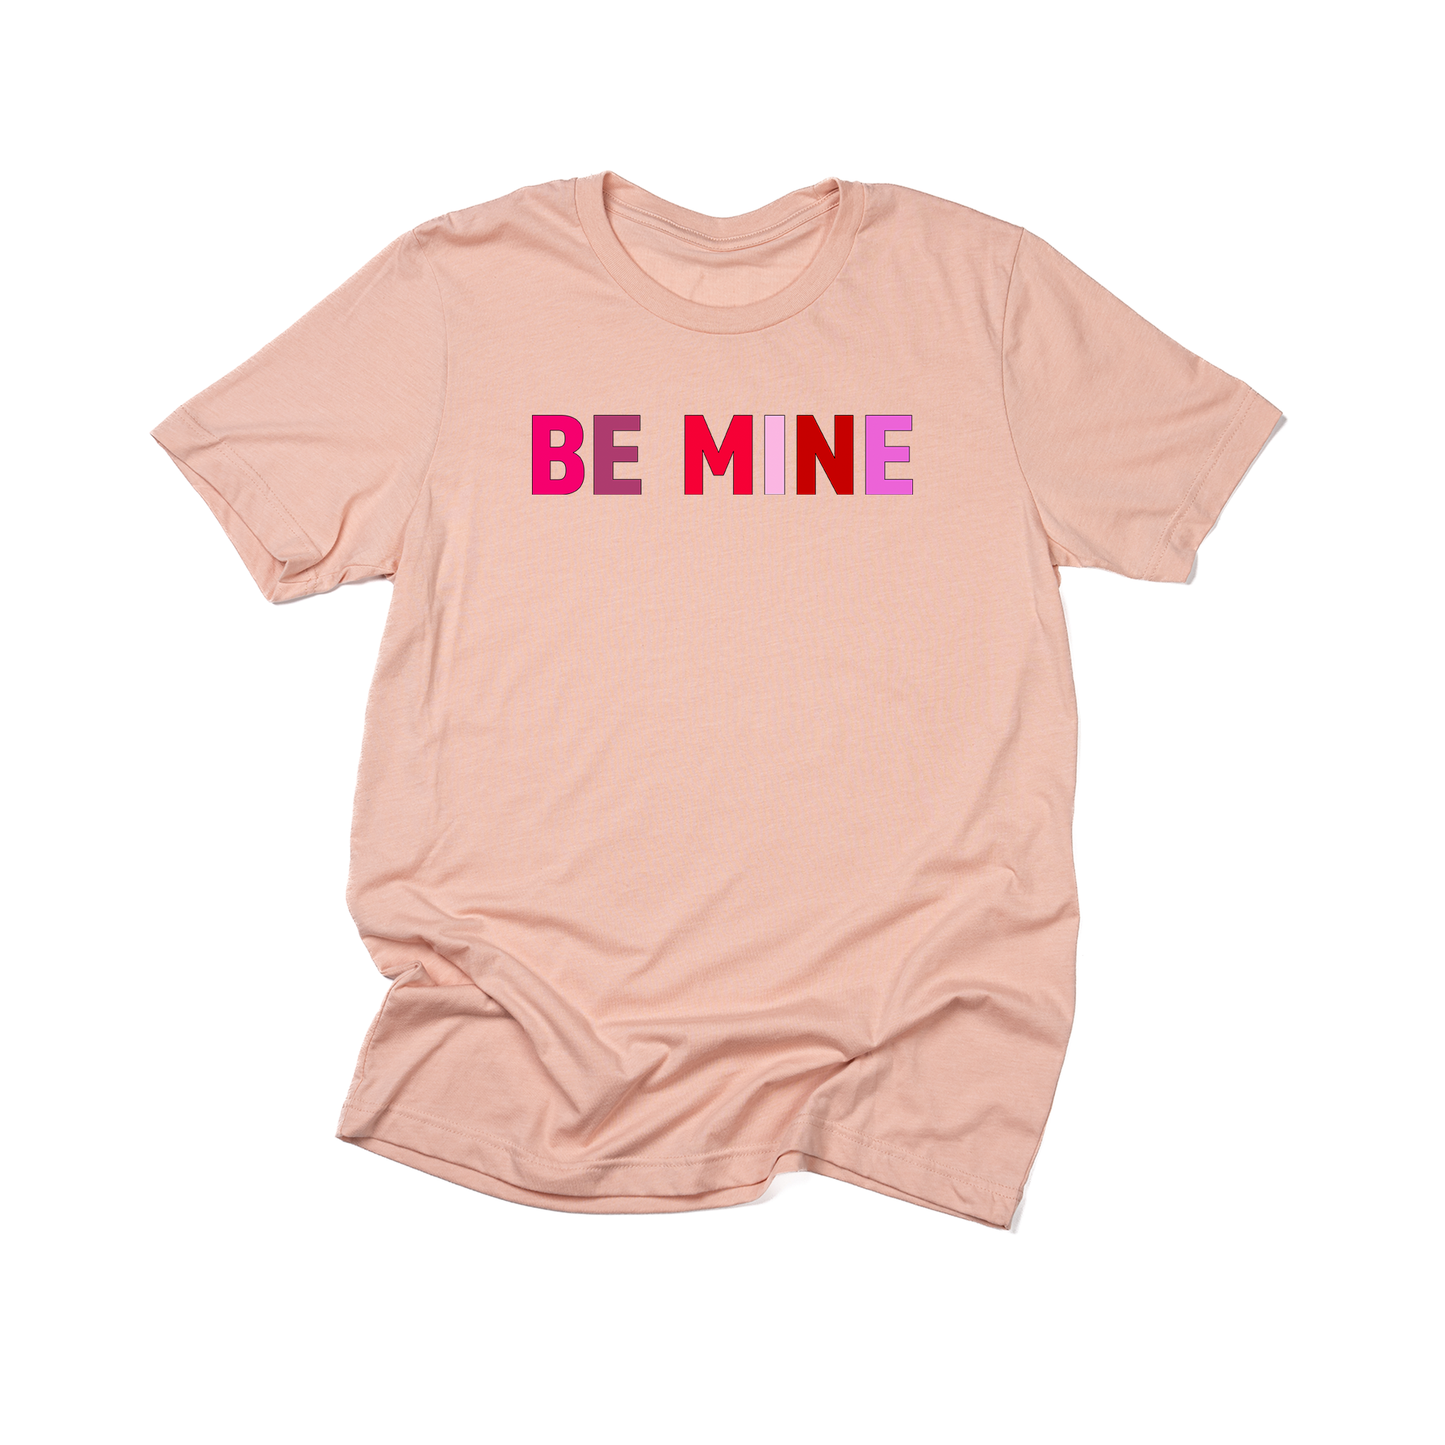 Be Mine - Tee (Peach)